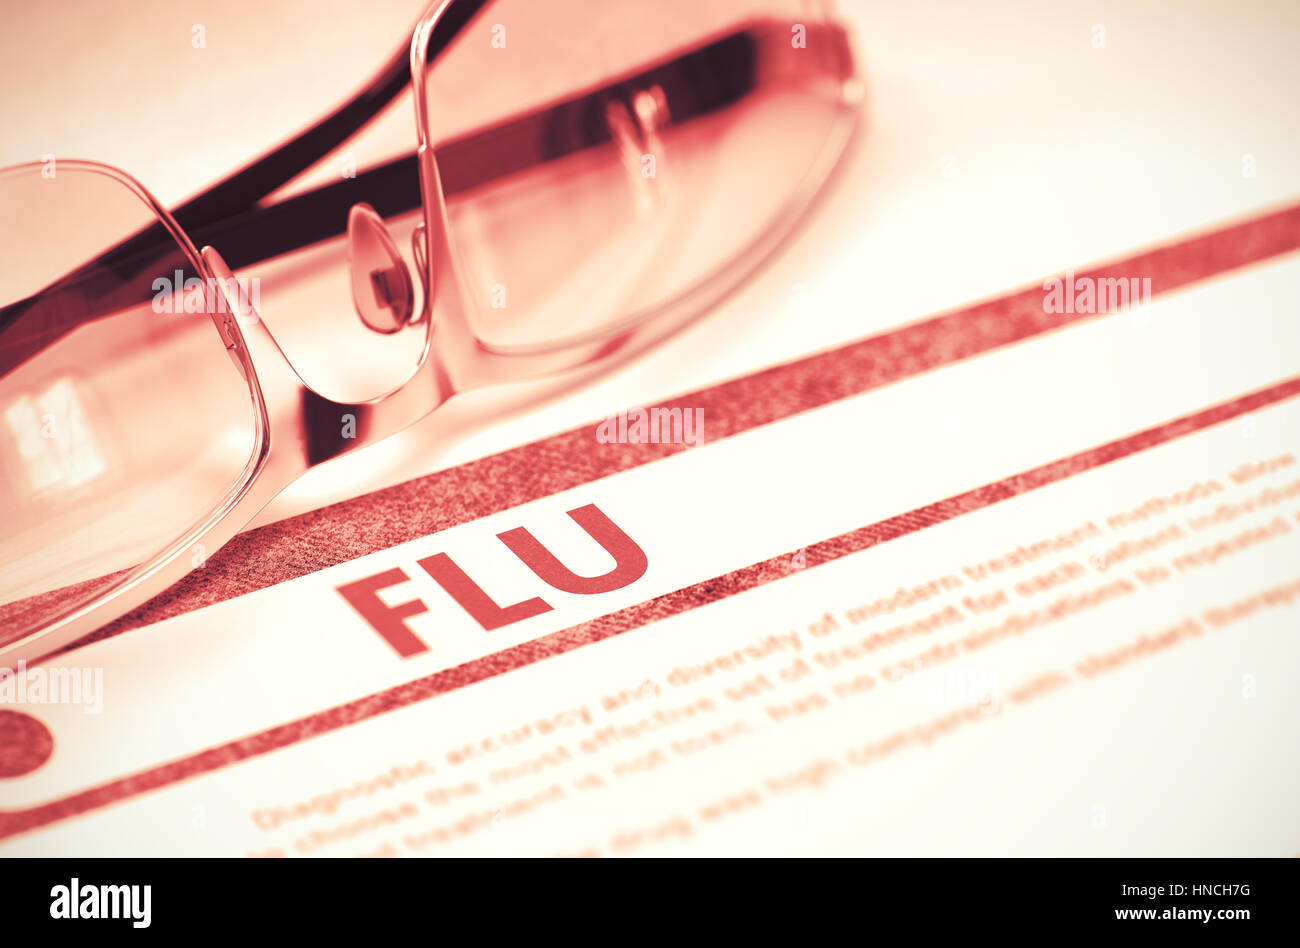 Flu. Medicine Concept on Red Background. 3D Illustration. Stock Photo